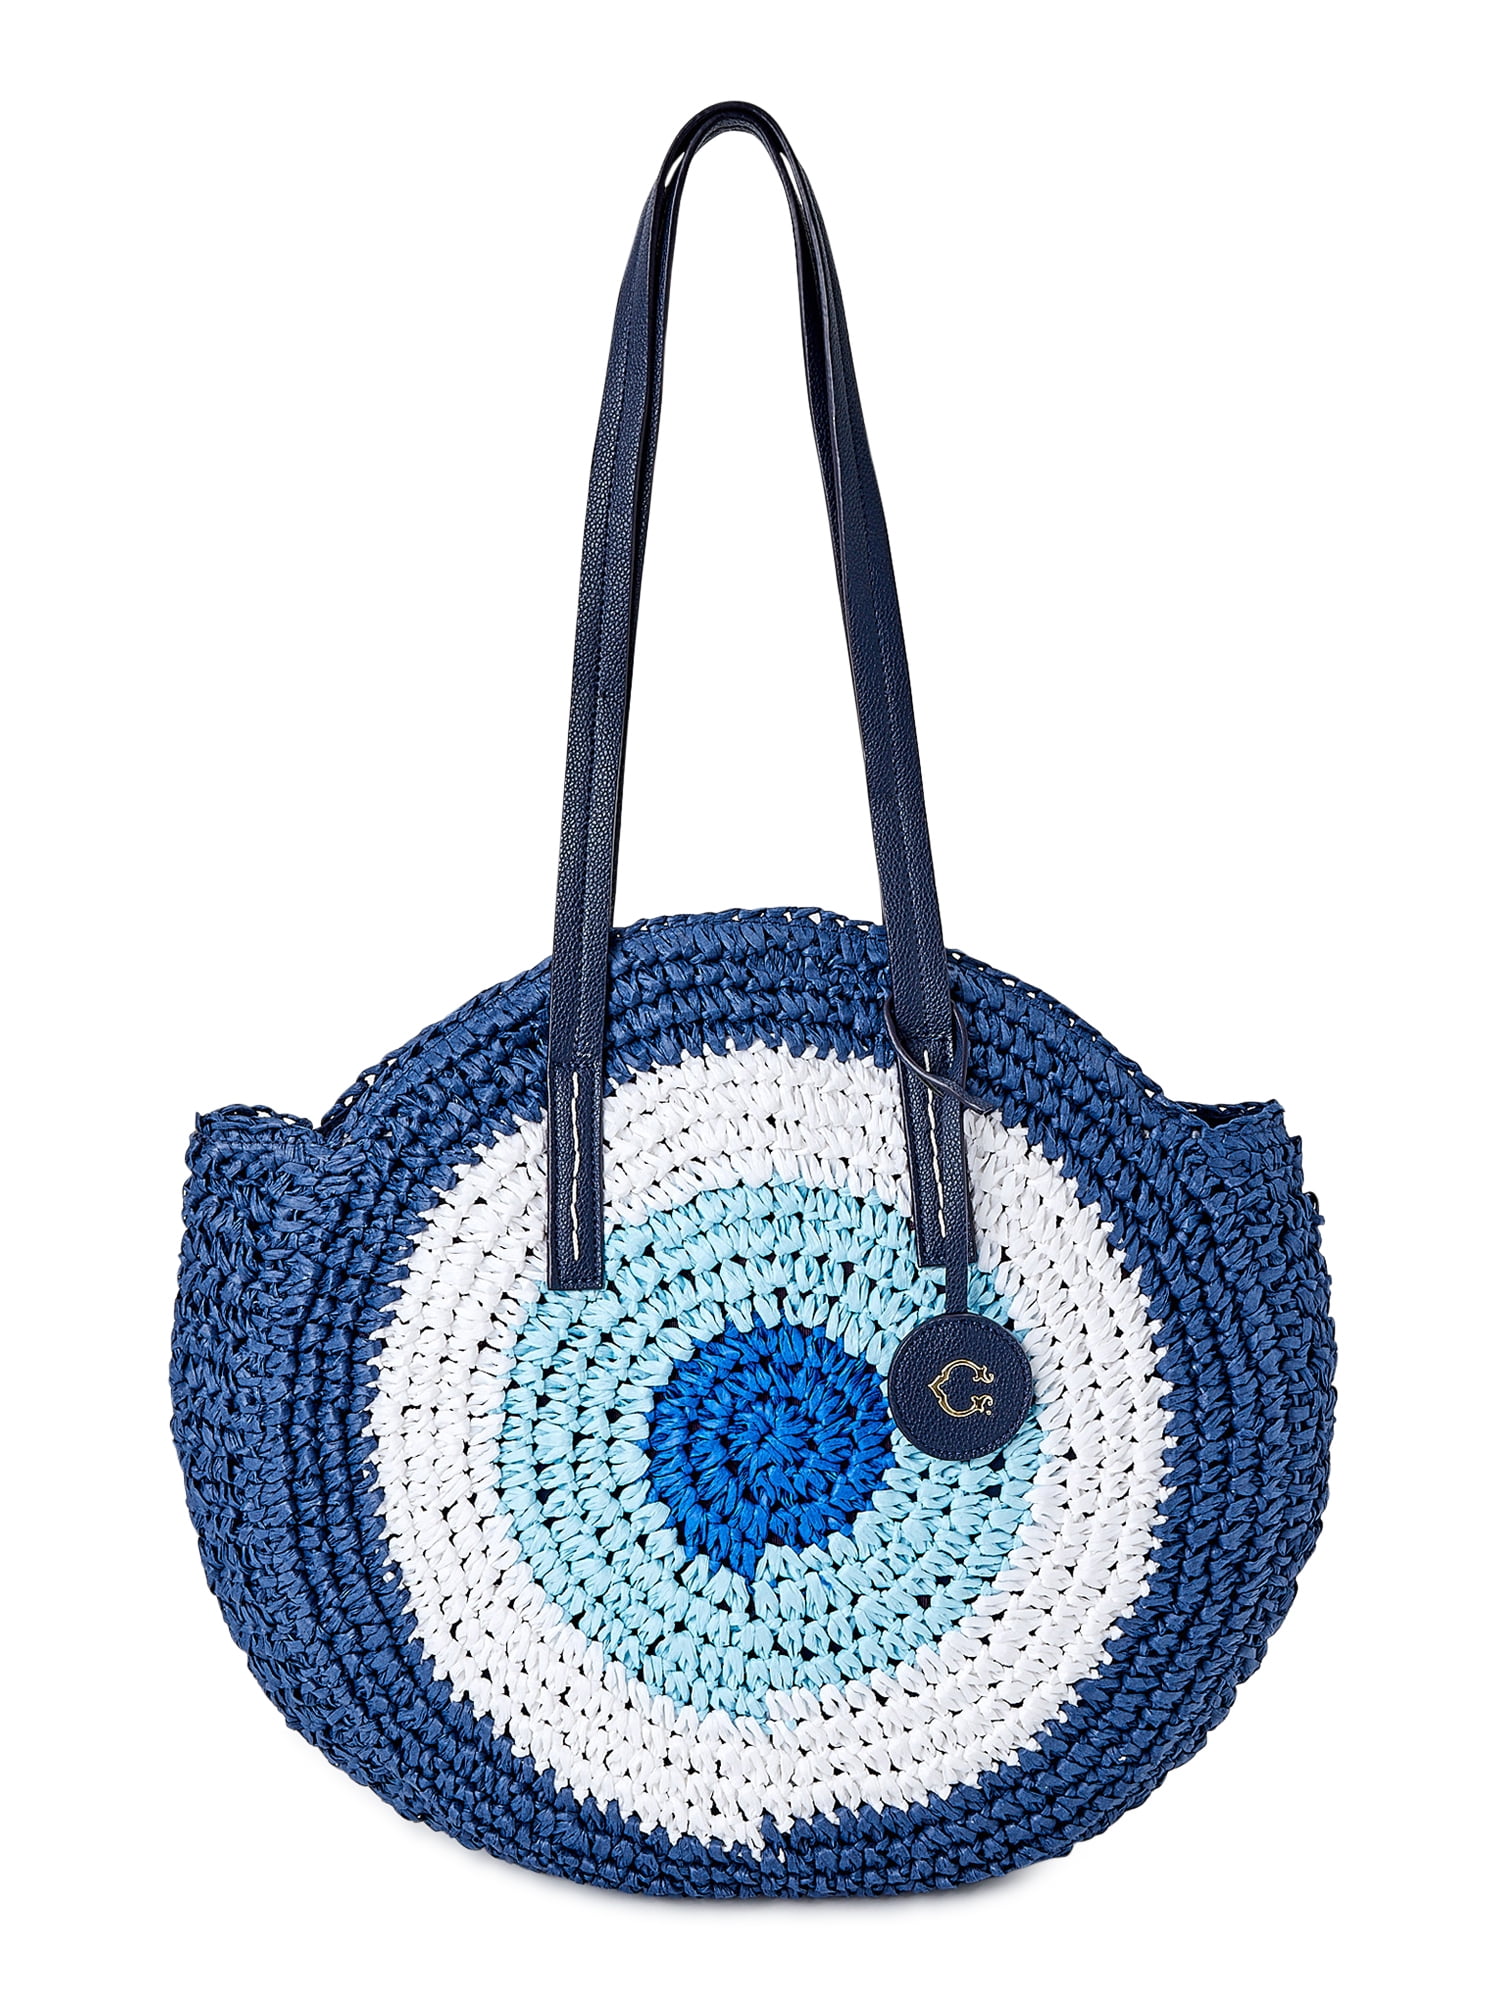 Blue Handbag Background, Casual, Stylish, Modern PNG Transparent